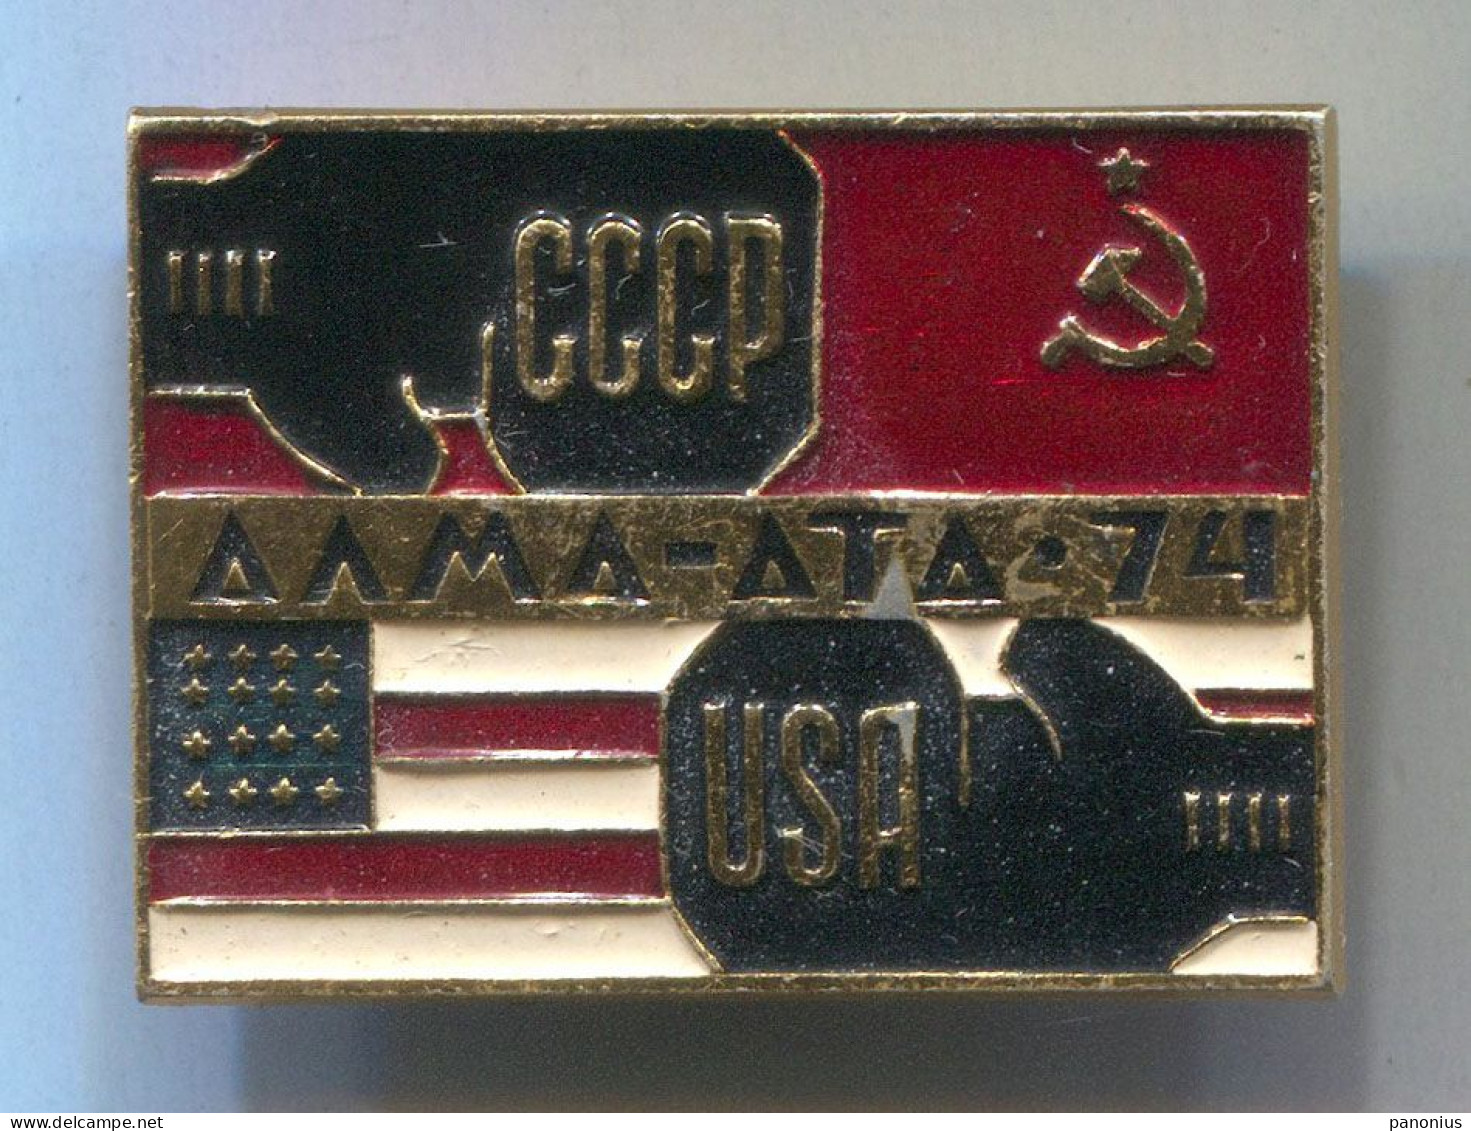 Boxing Box Boxen Pugilato - Alma - Ata Kazakhstan 1974. USSR Russia Vs USA, Vintage  Pin  Badge  Abzeichen - Boxing